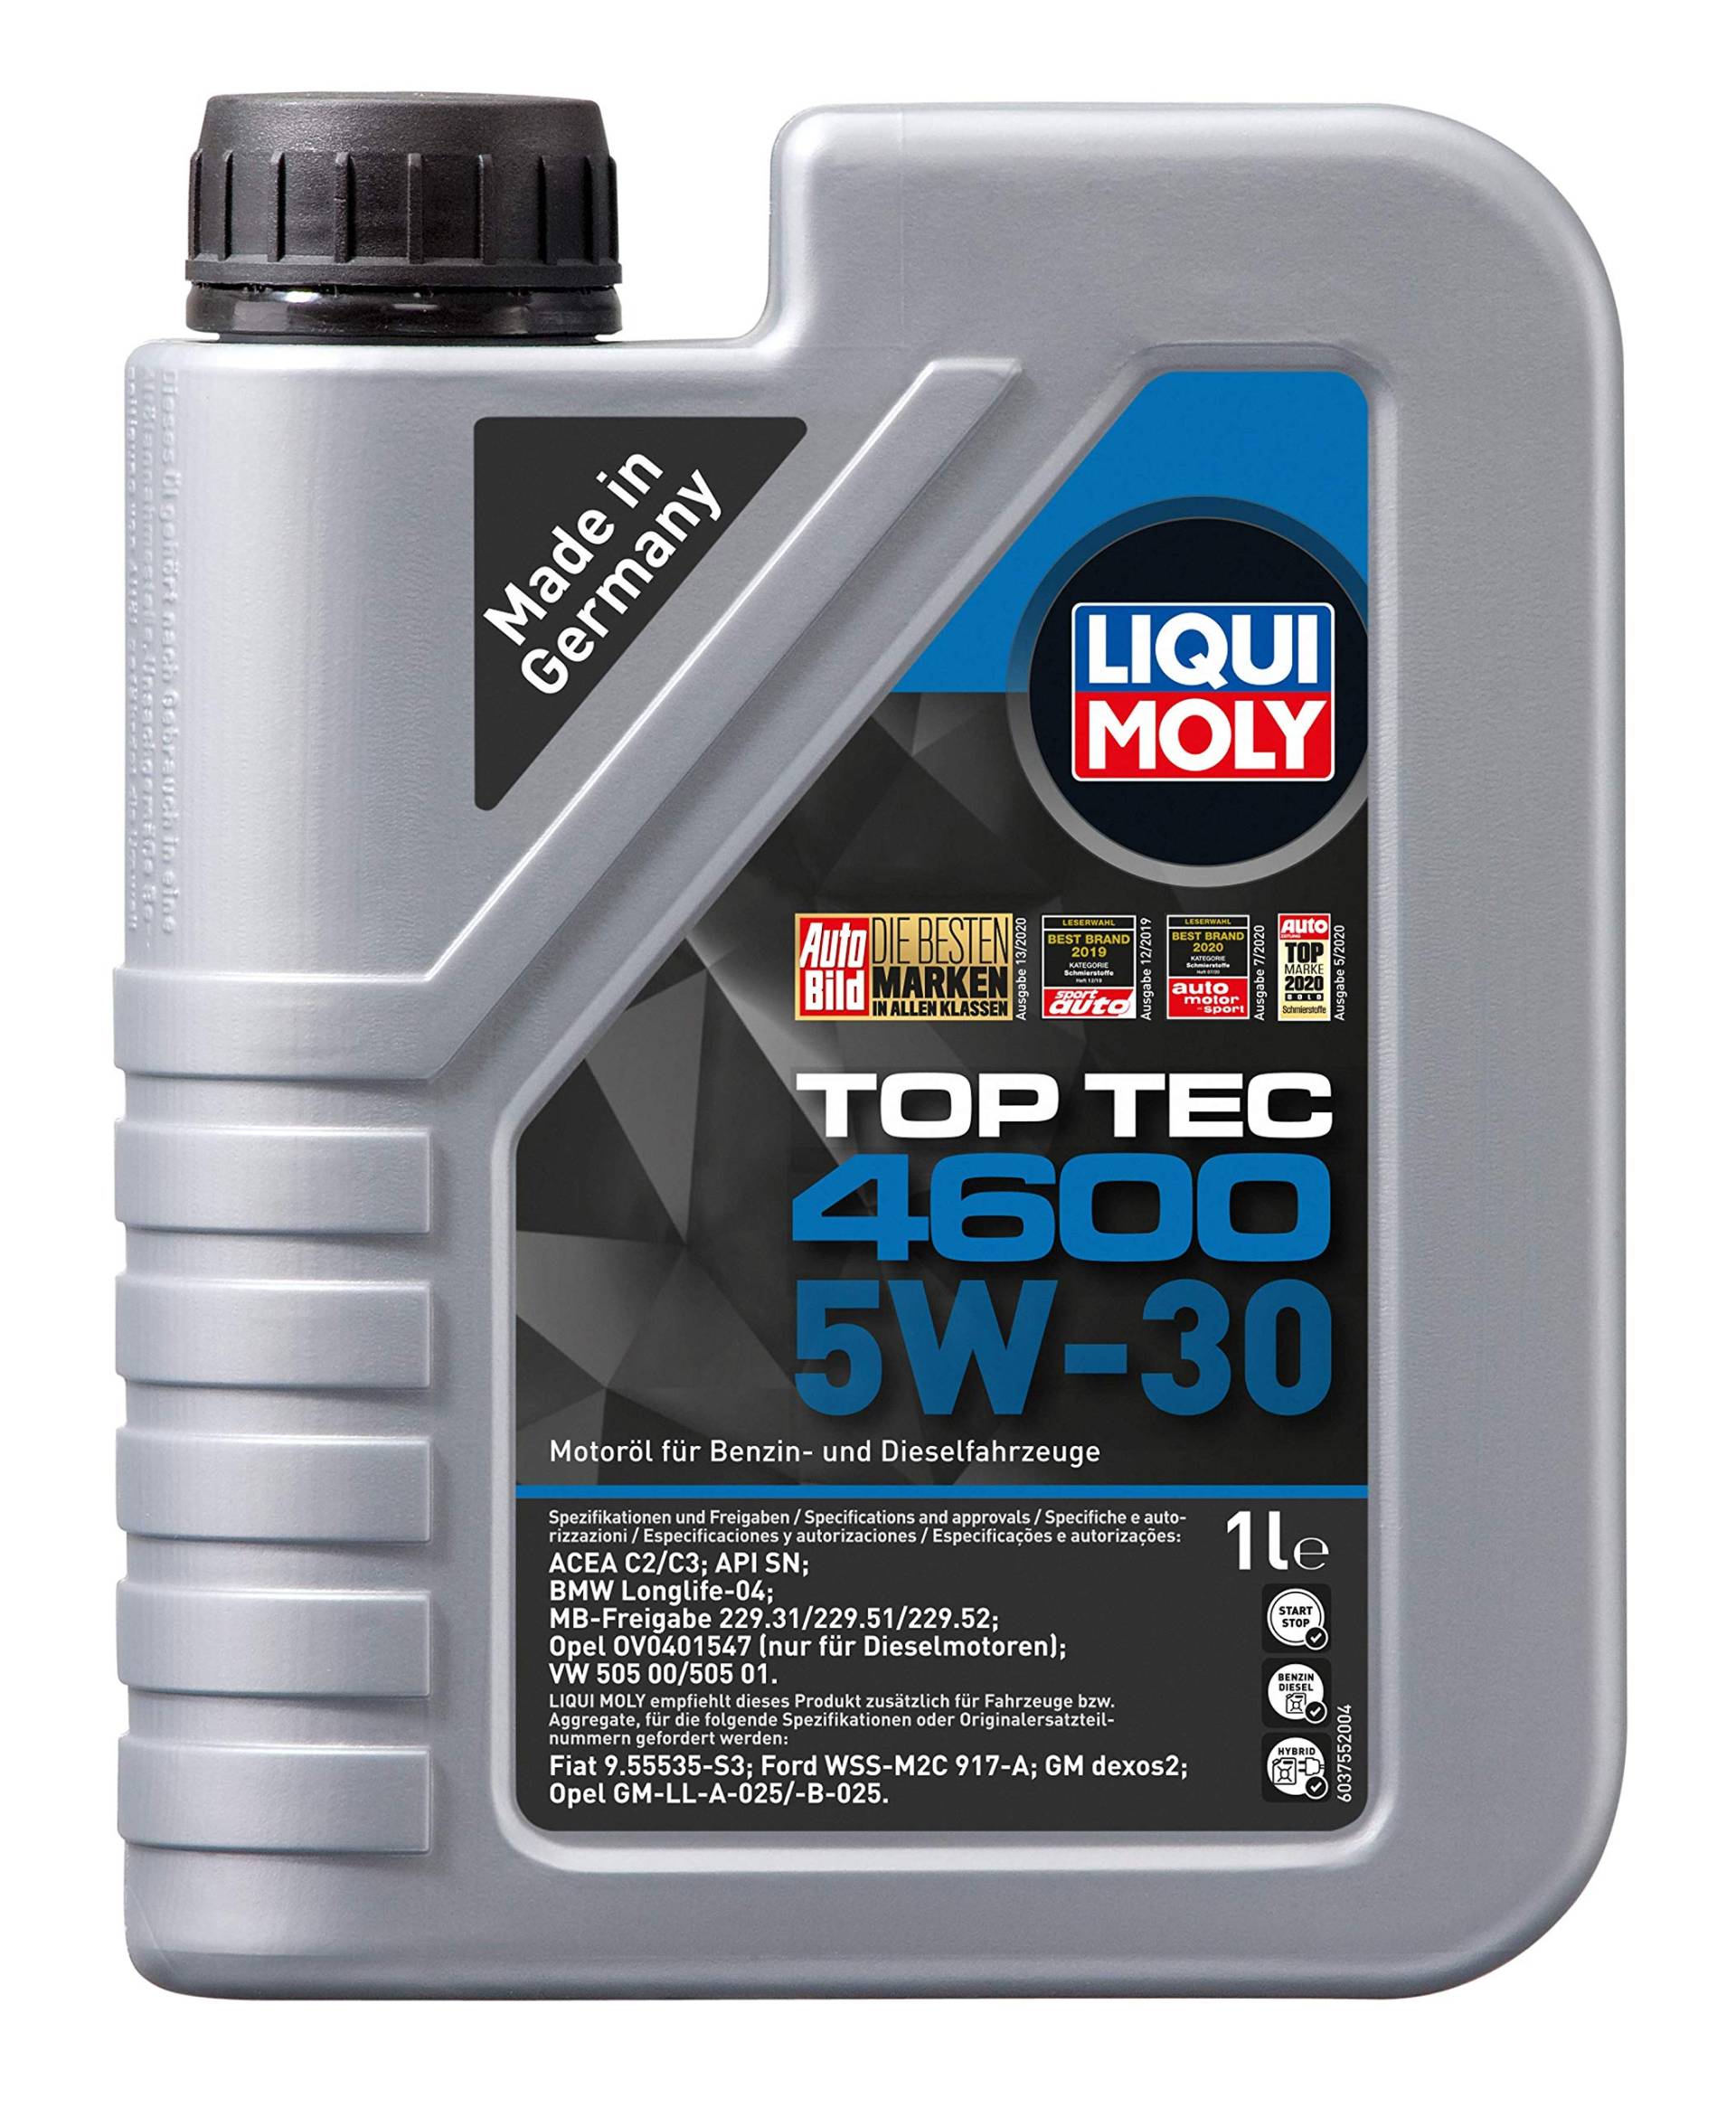 LIQUI MOLY Top Tec 4600 5W-30 | 1 L | Synthesetechnologie Motoröl | Art.-Nr.: 3755 von Liqui Moly